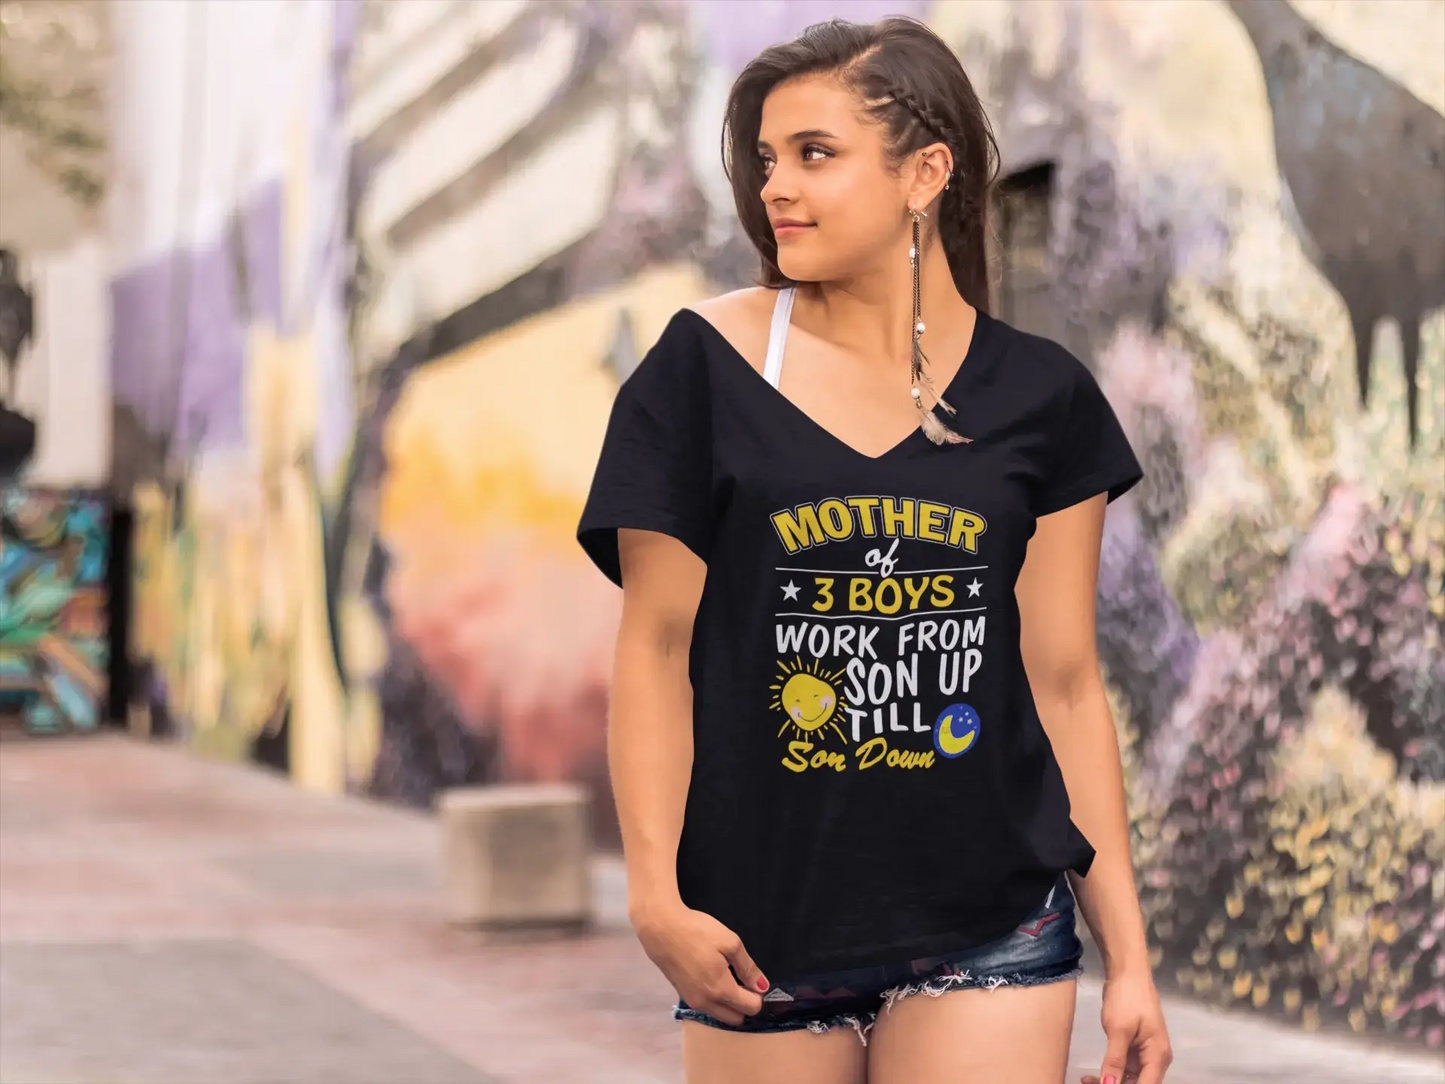 ULTRABASIC Women's Novelty T-Shirt Mother of 3 Boys - Funny Short Sleeve Tee Shirt Tops